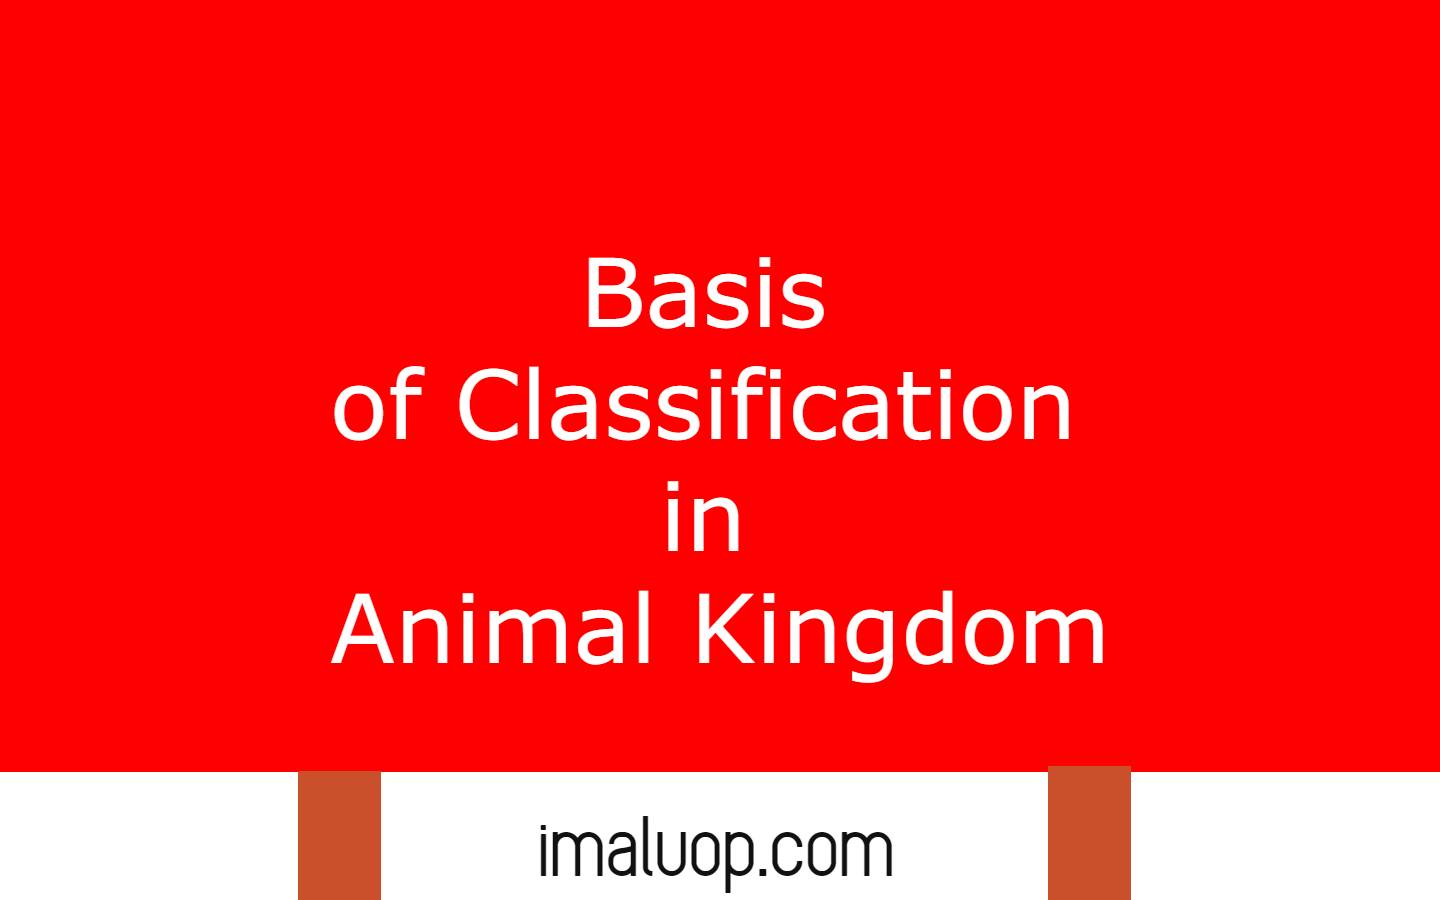 Basis of Classification in Animal Kingdom